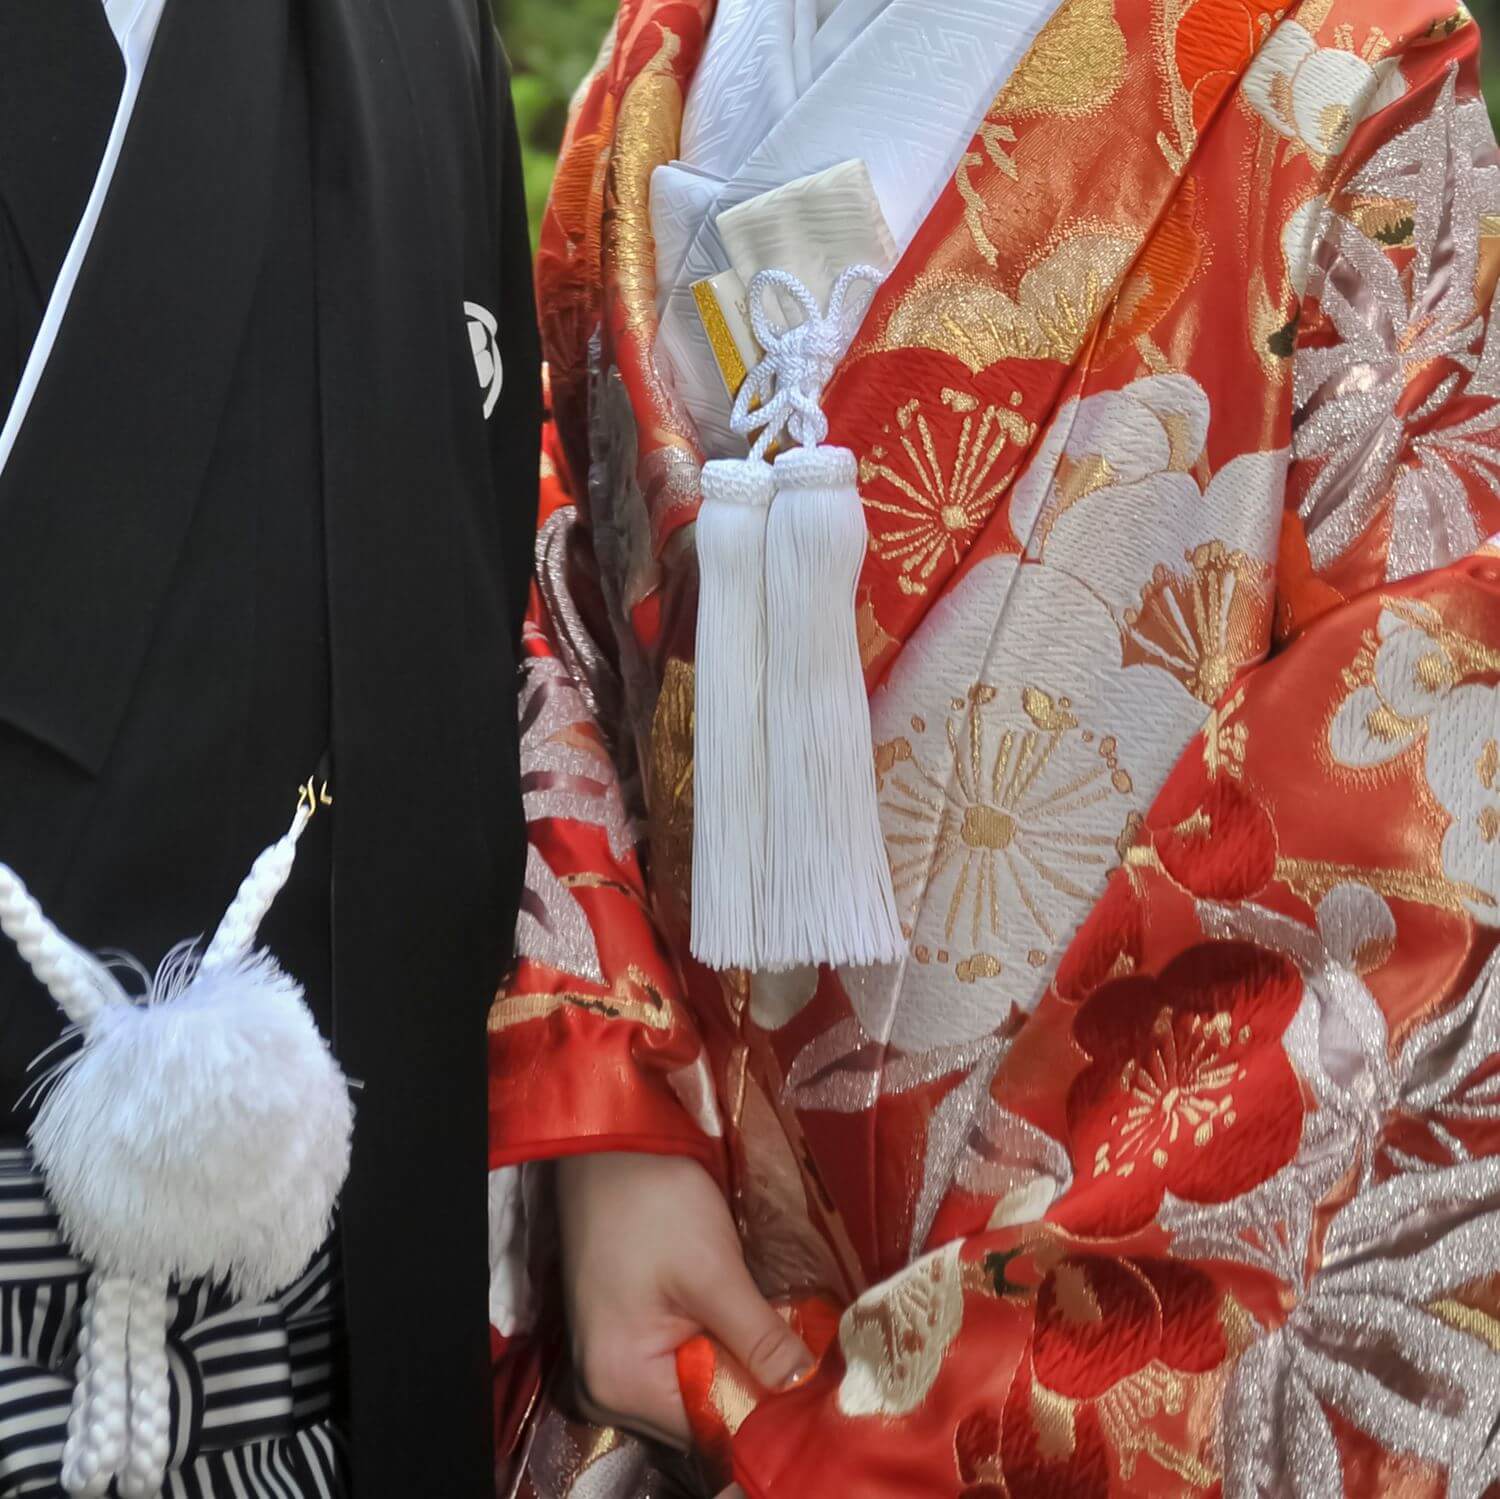 Japanese bride and groom = Shutterstock